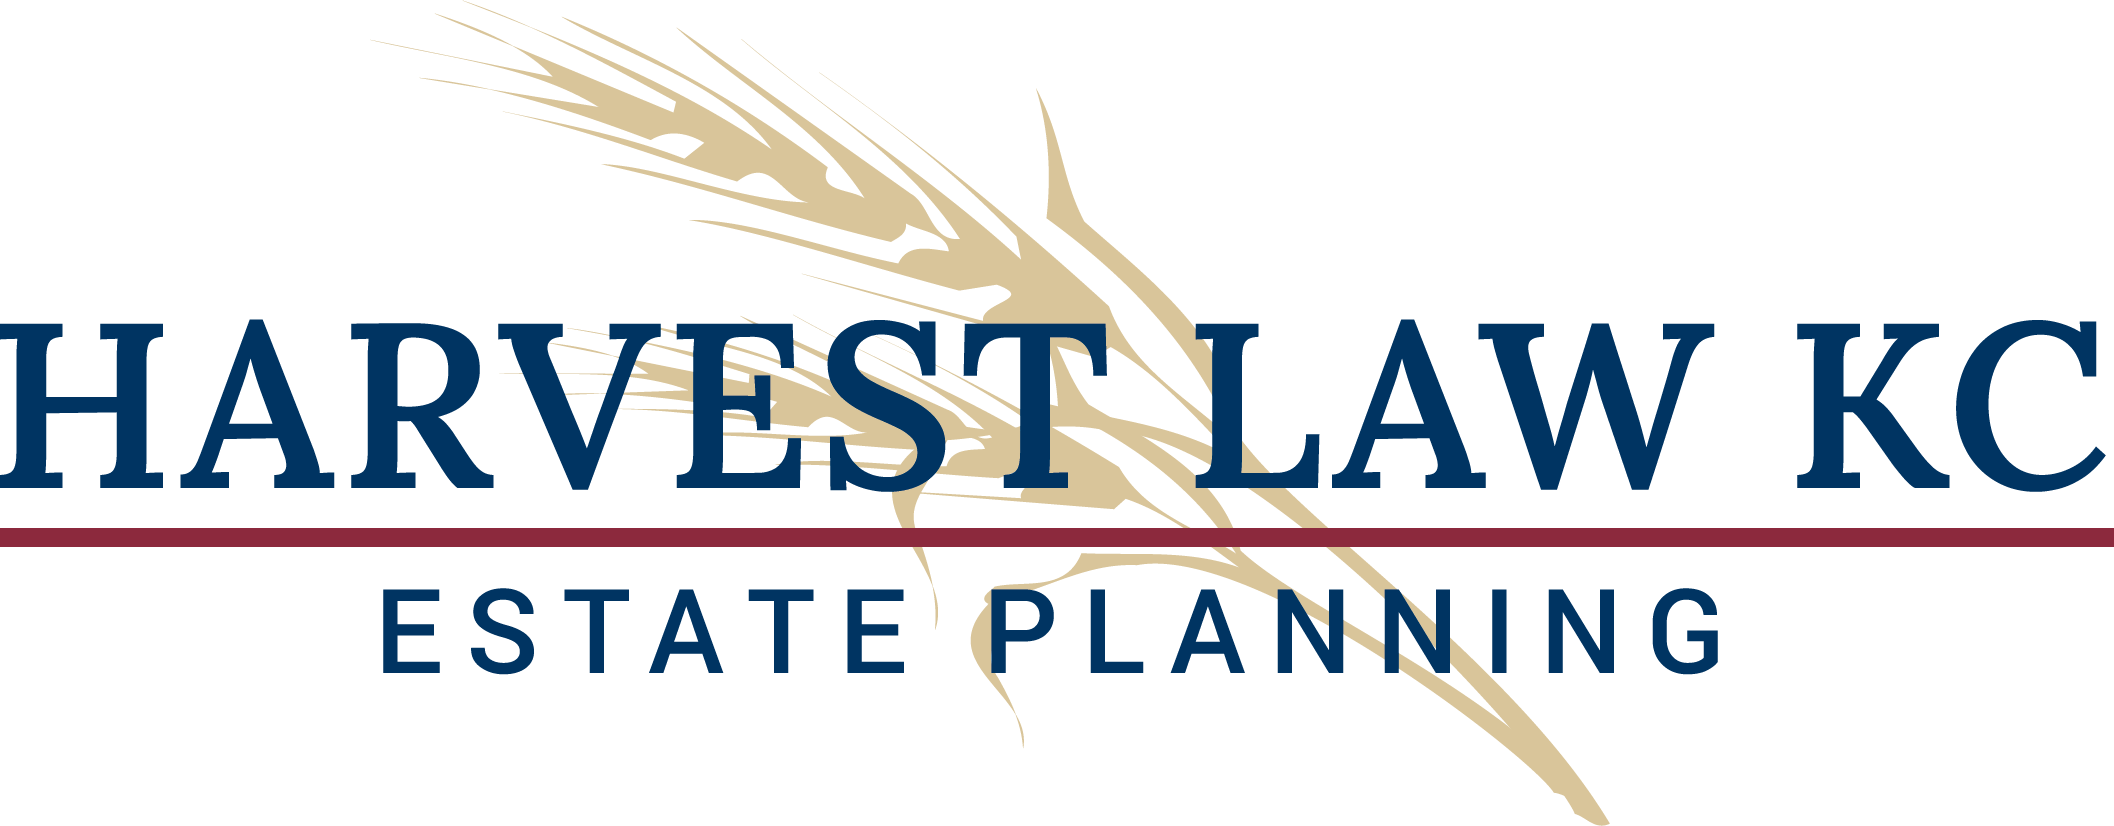 Harvest Law logo